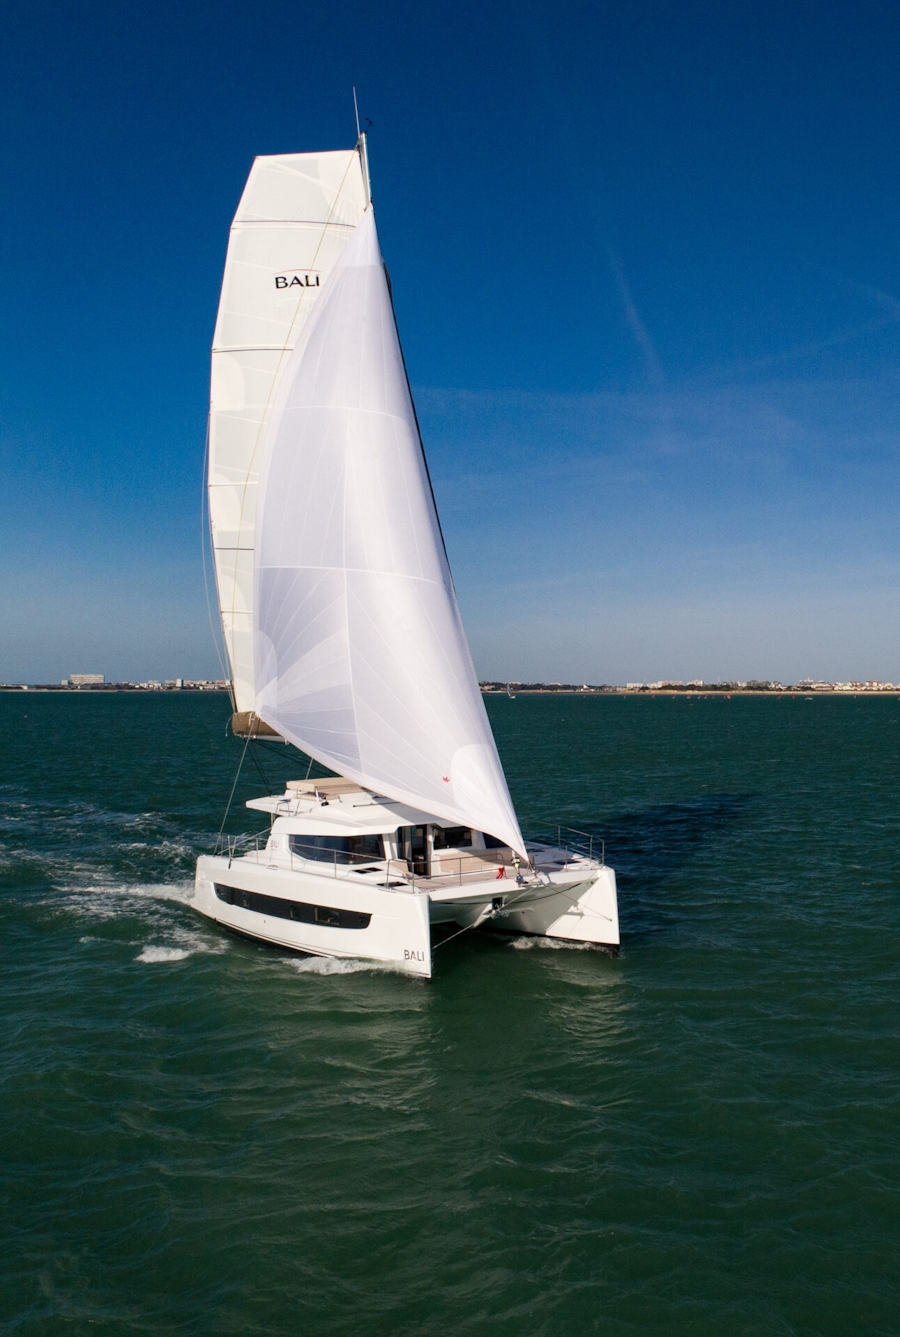 dream yacht charter bali 4.1